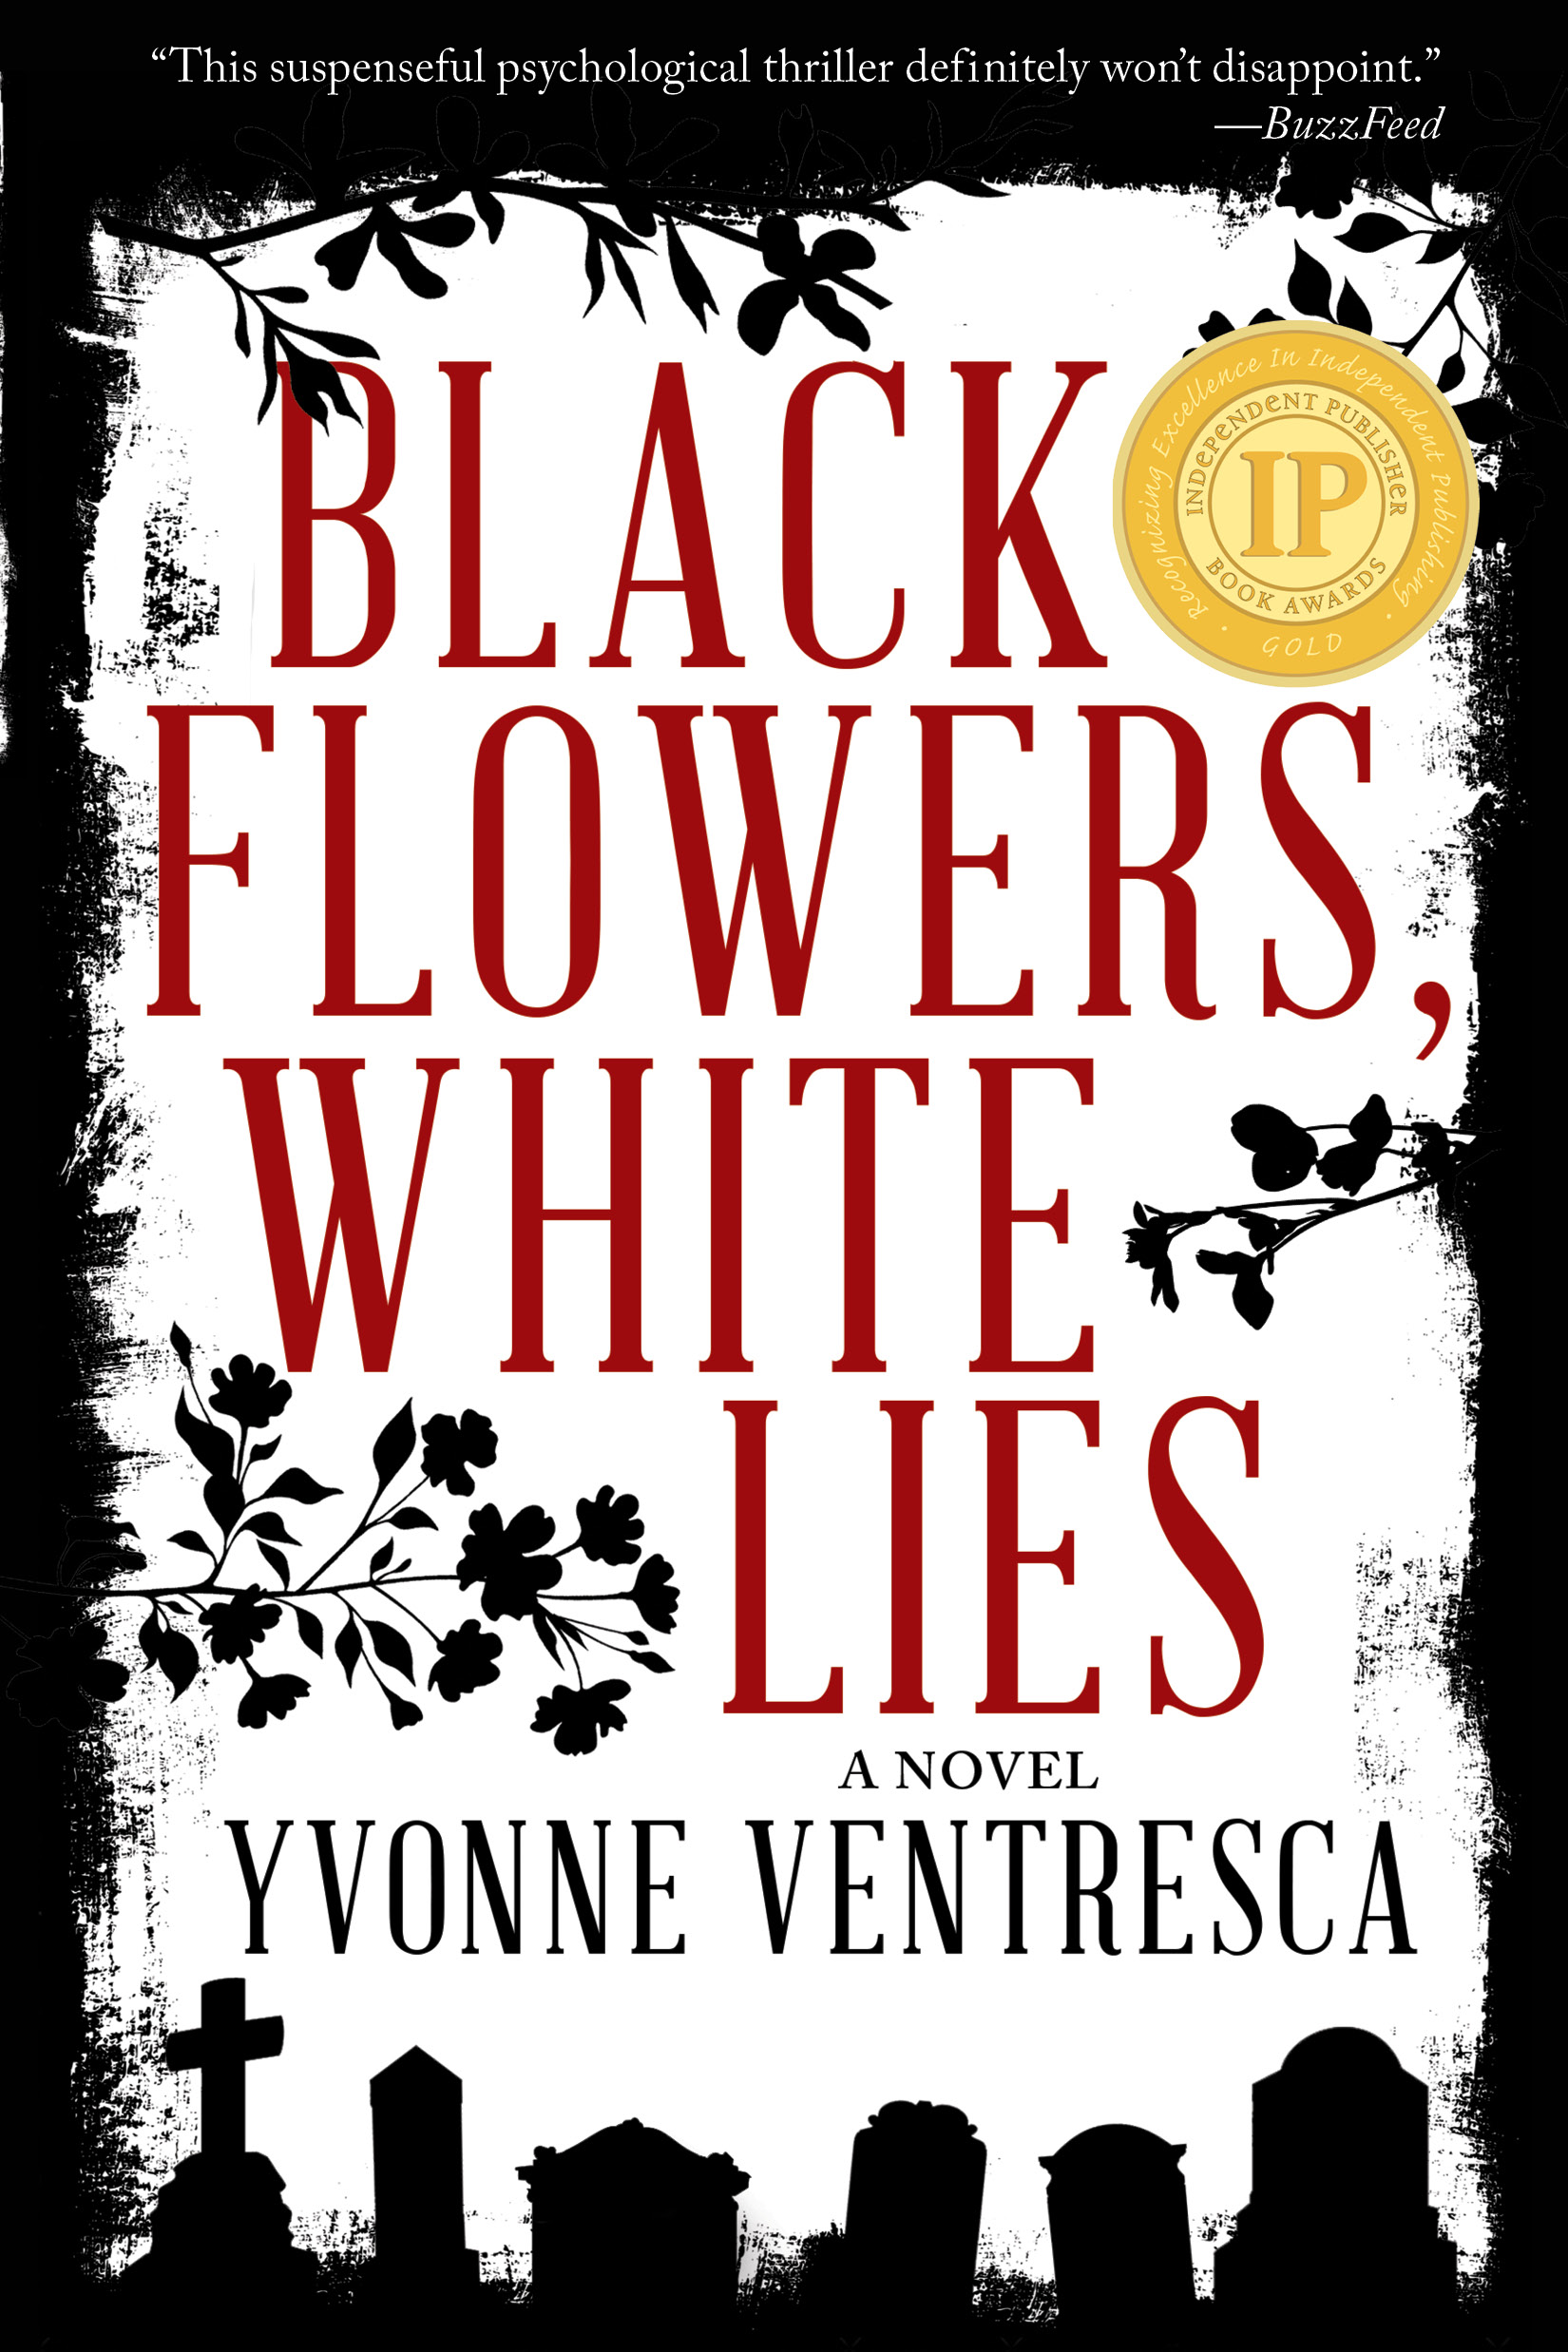 Black Flowers, White Lies by Yvonne Ventresca